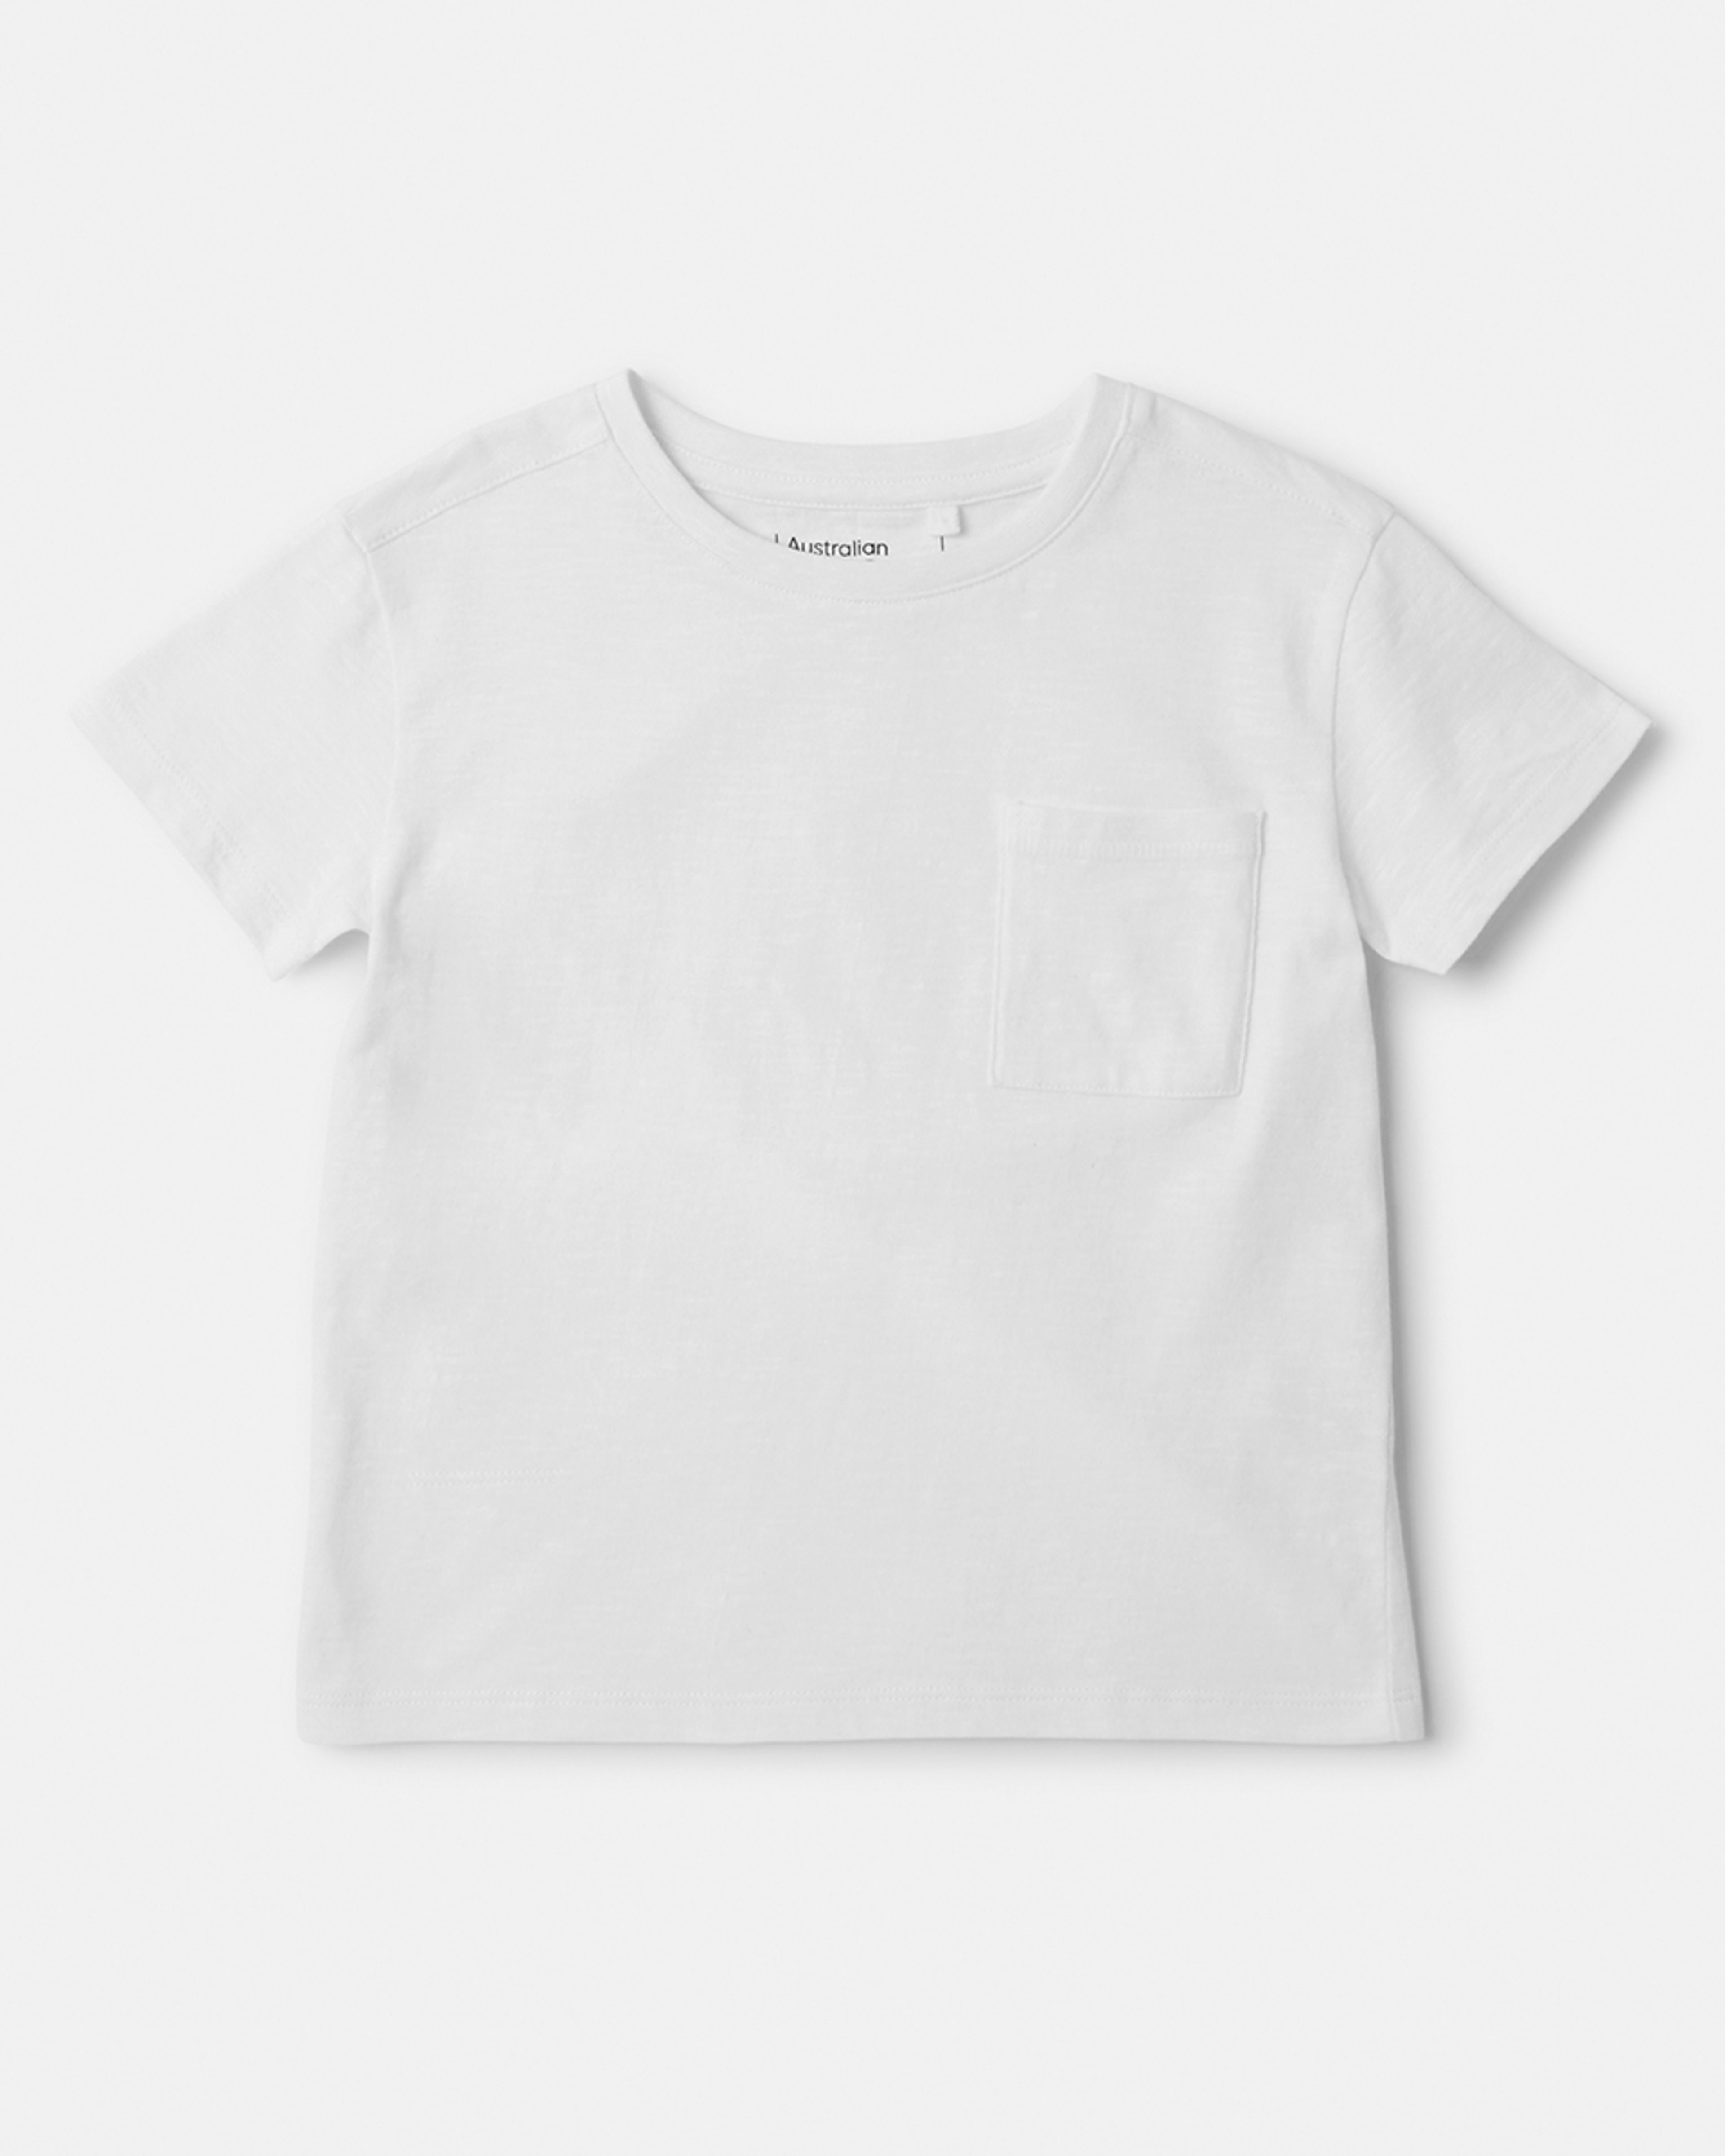 Plain Australian Cotton T-shirt - Kmart